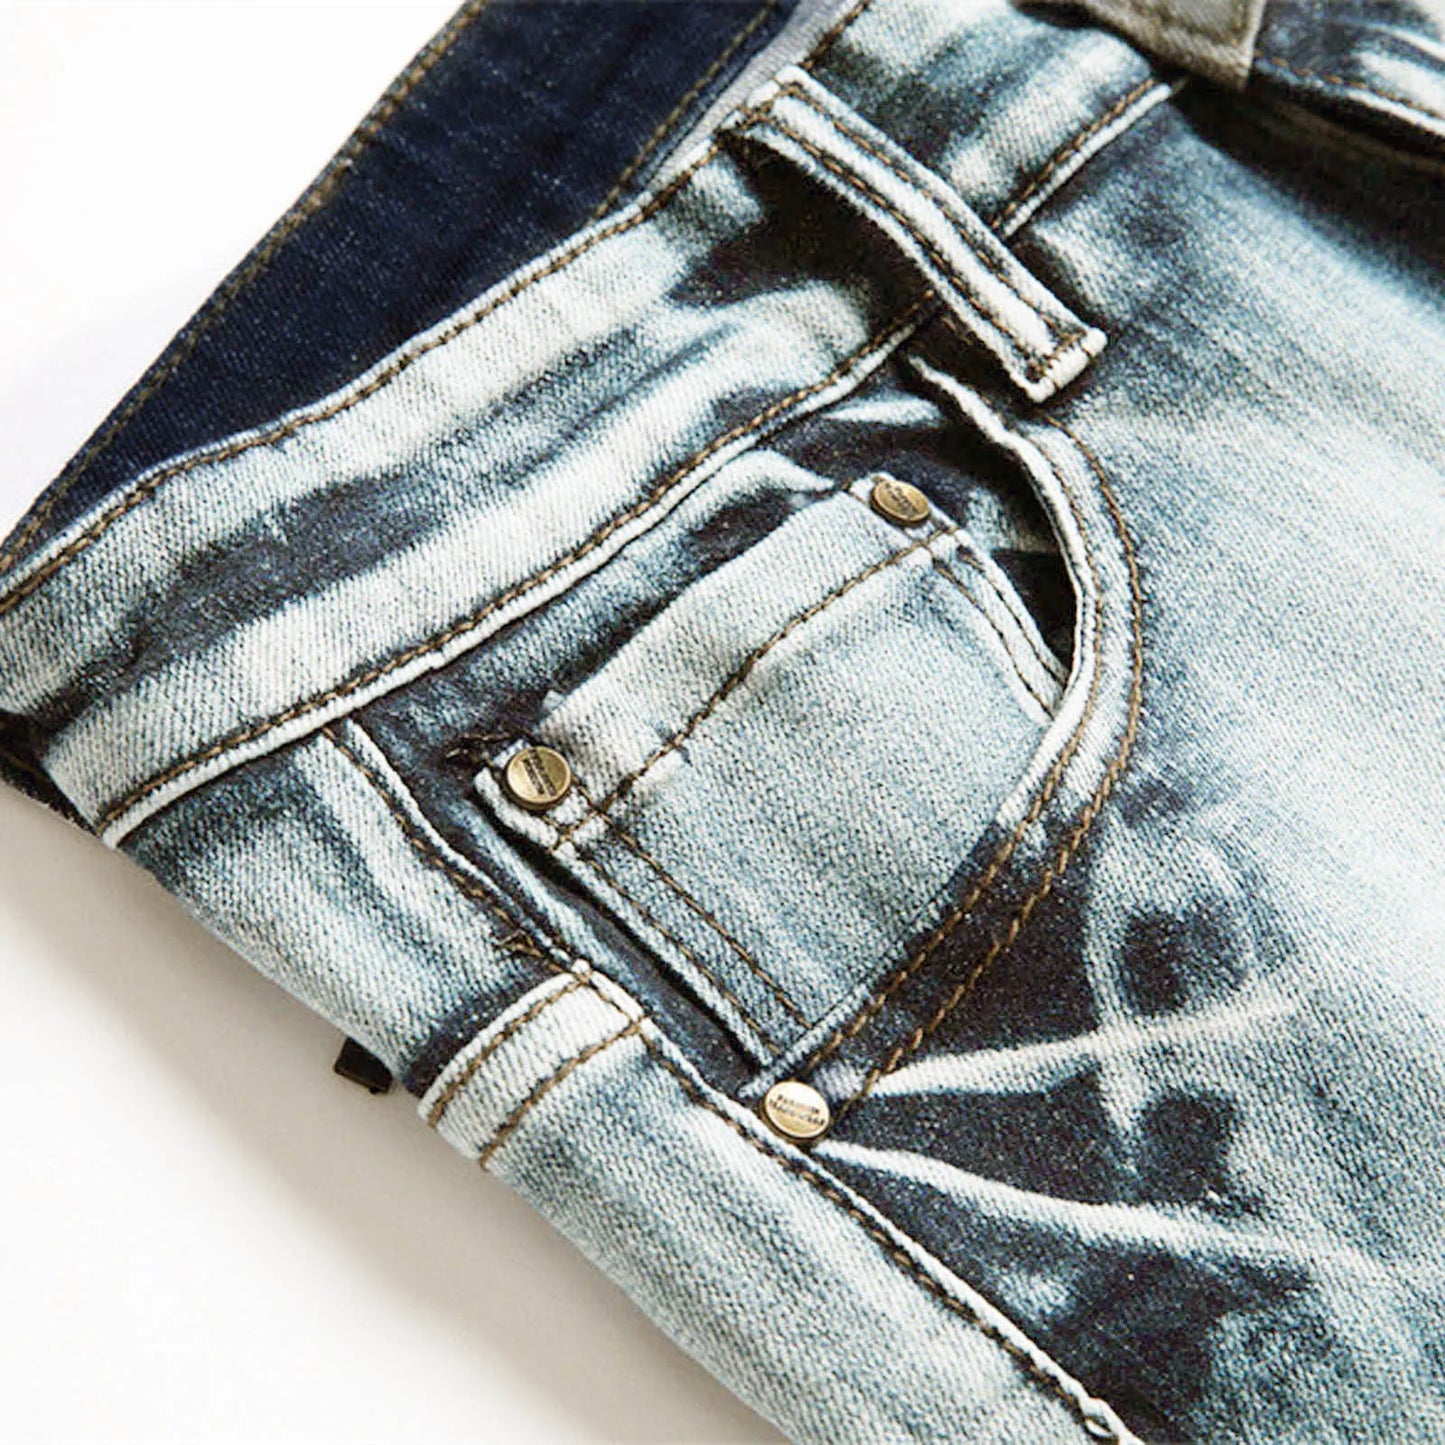 Men's Jeans Vintage Distressed Camouflage  Ripped PatchworkJeans Luxury Designer Slim Skinny Jeans Casual Denim Pants For Men